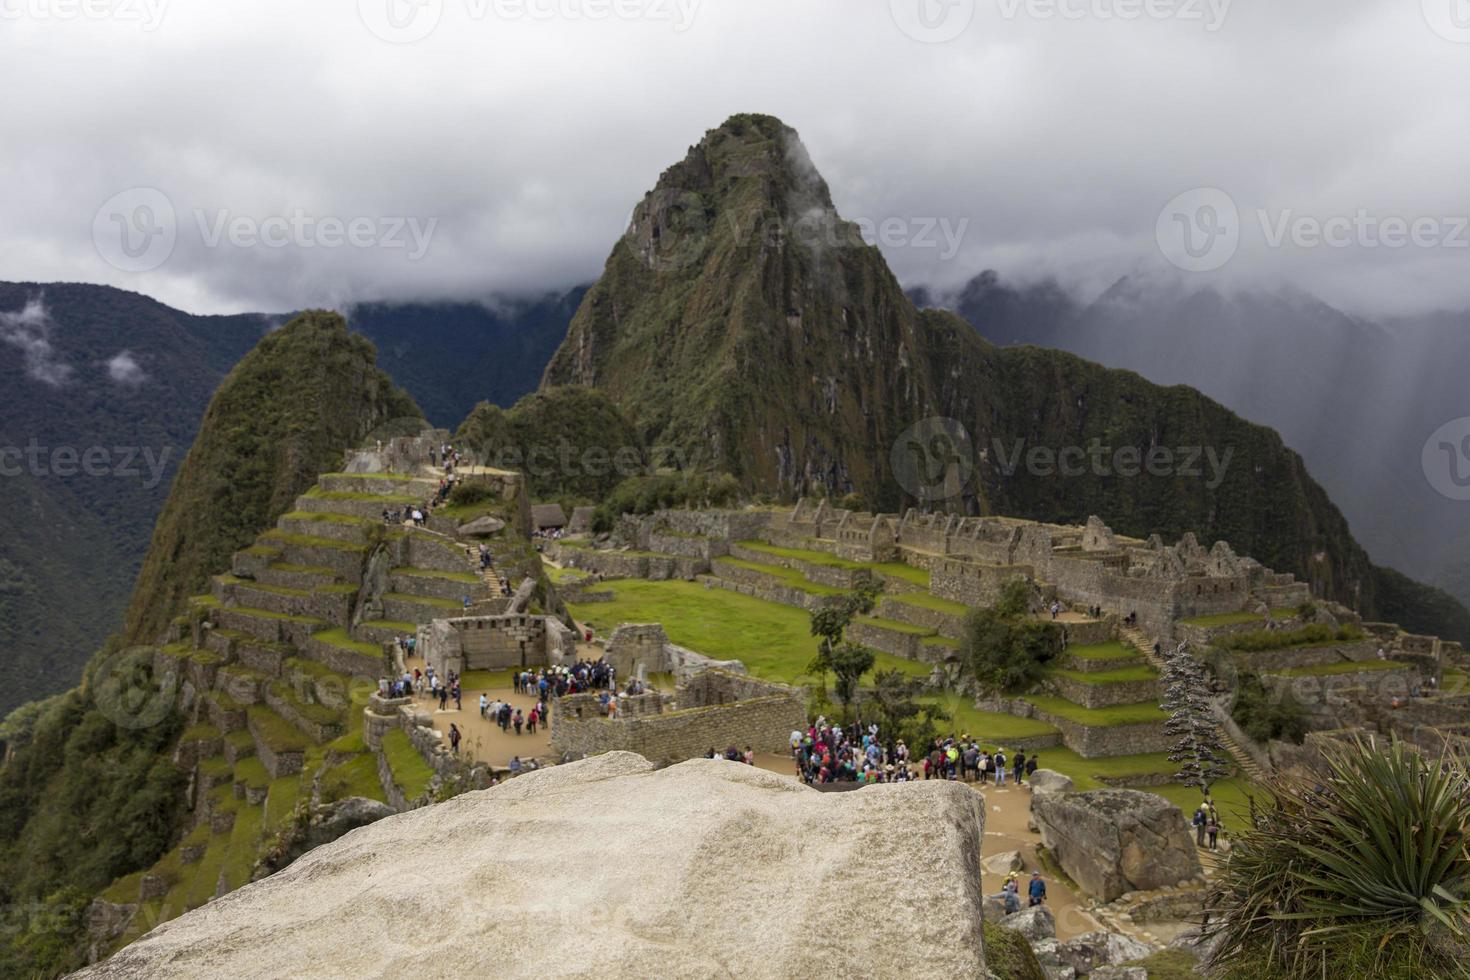 Ruínas de Machu Picchu no Peru foto